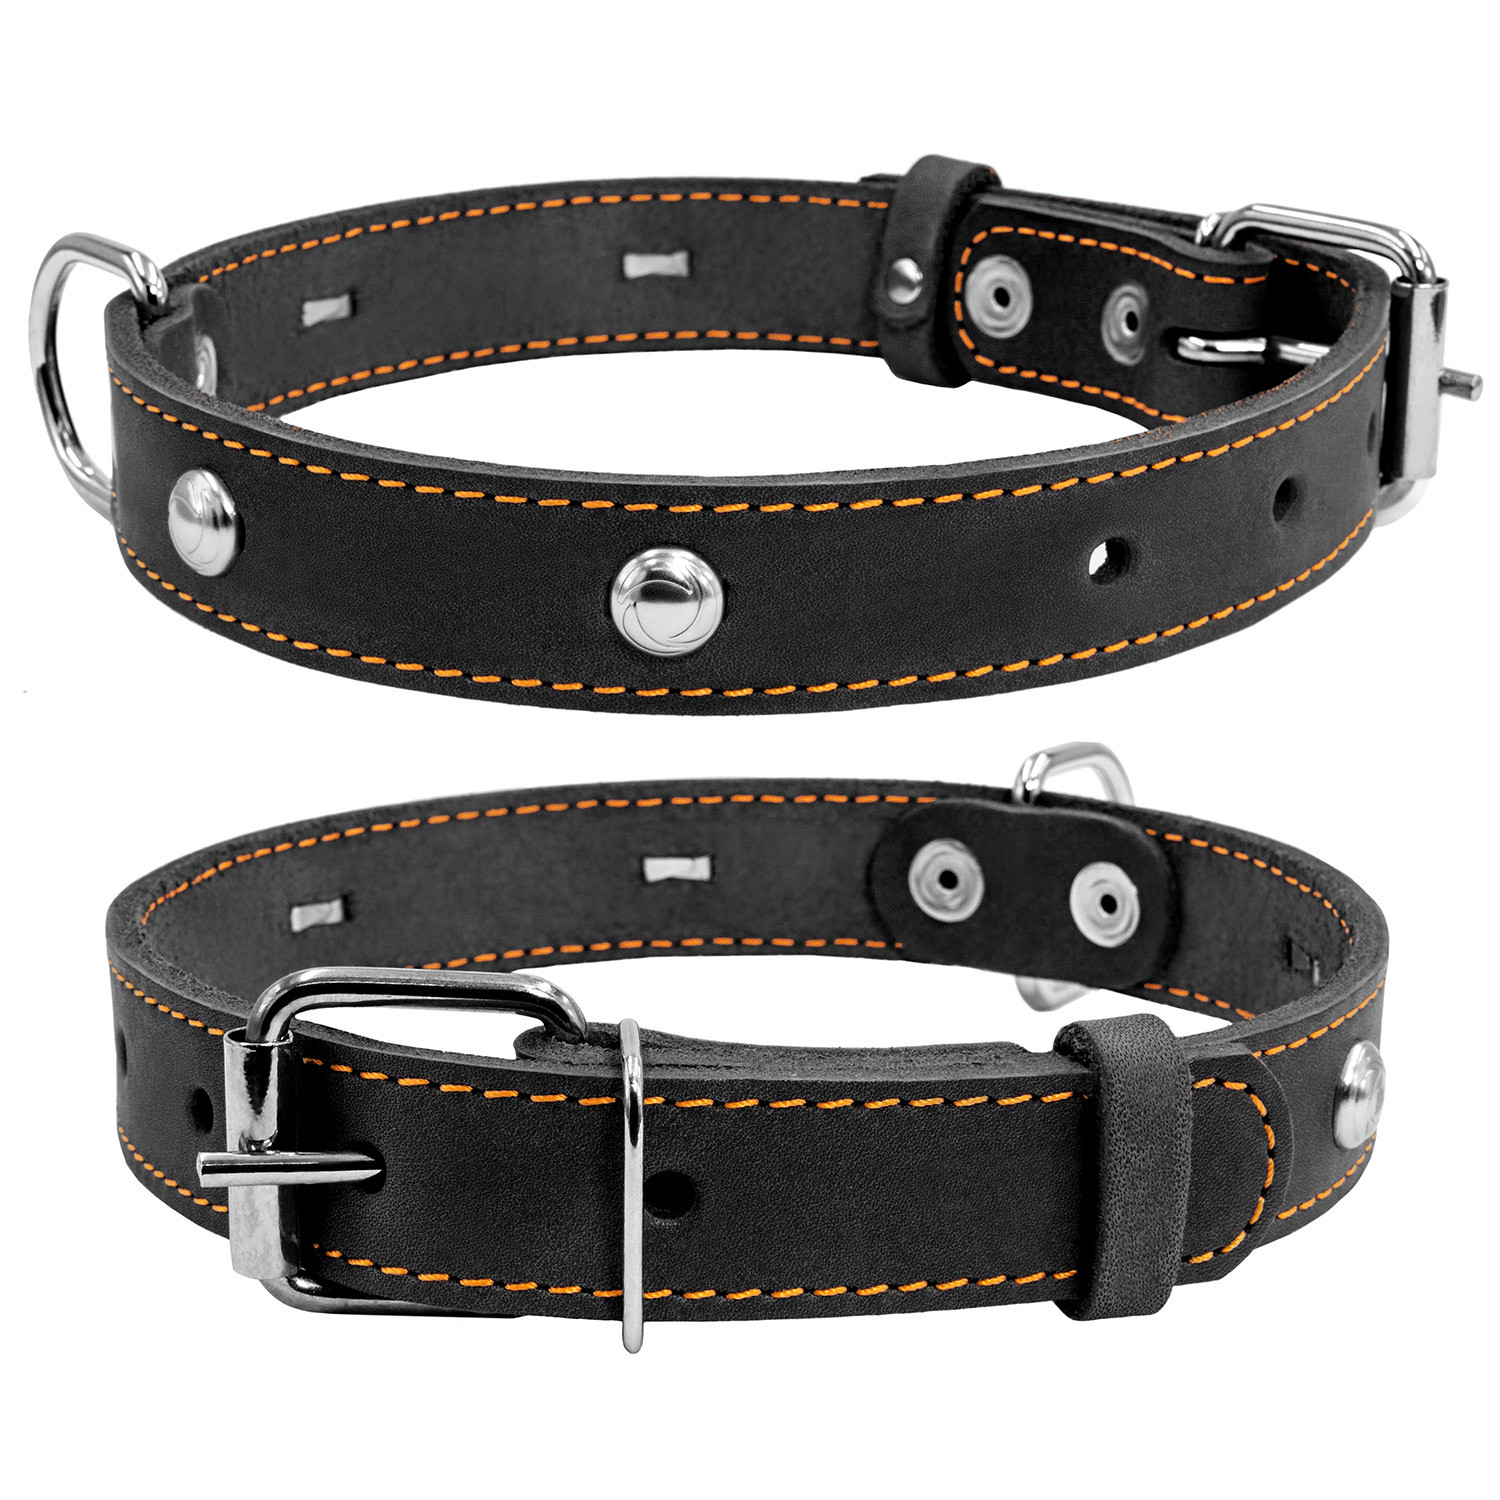 Genuine belt leather collars